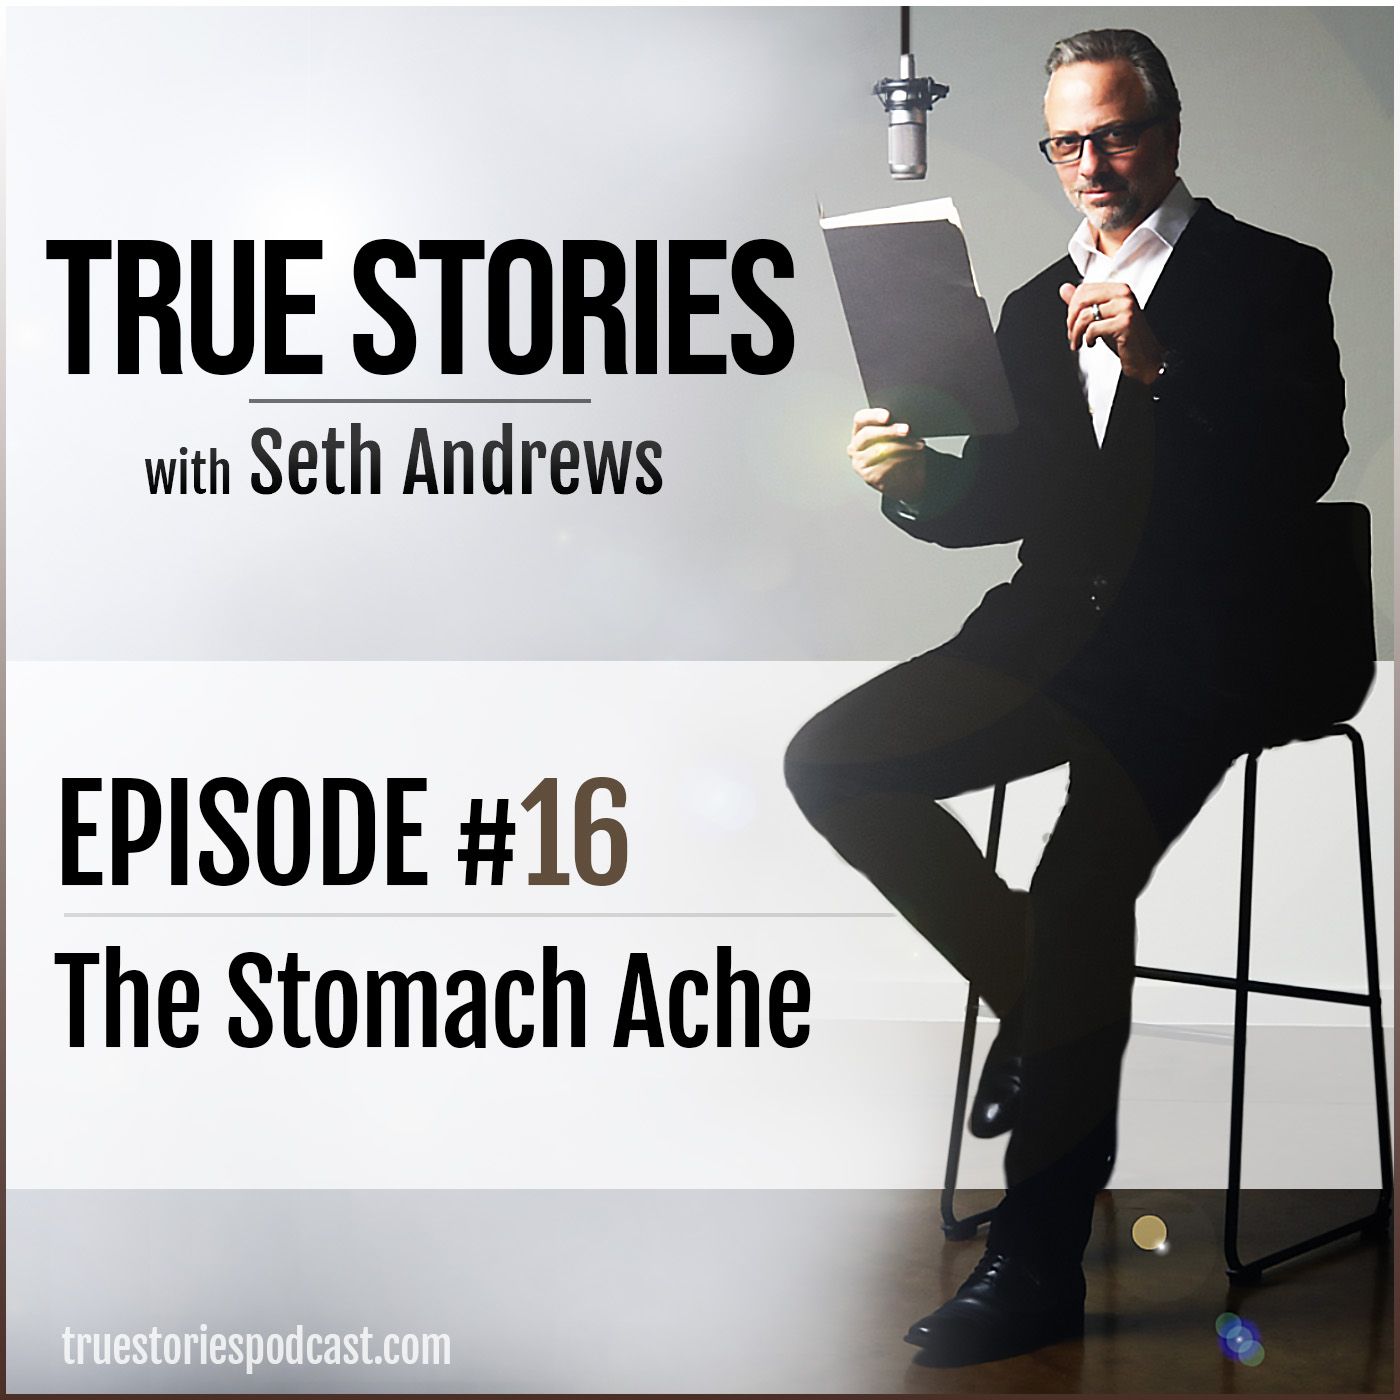 True Stories #16 - The Stomach Ache